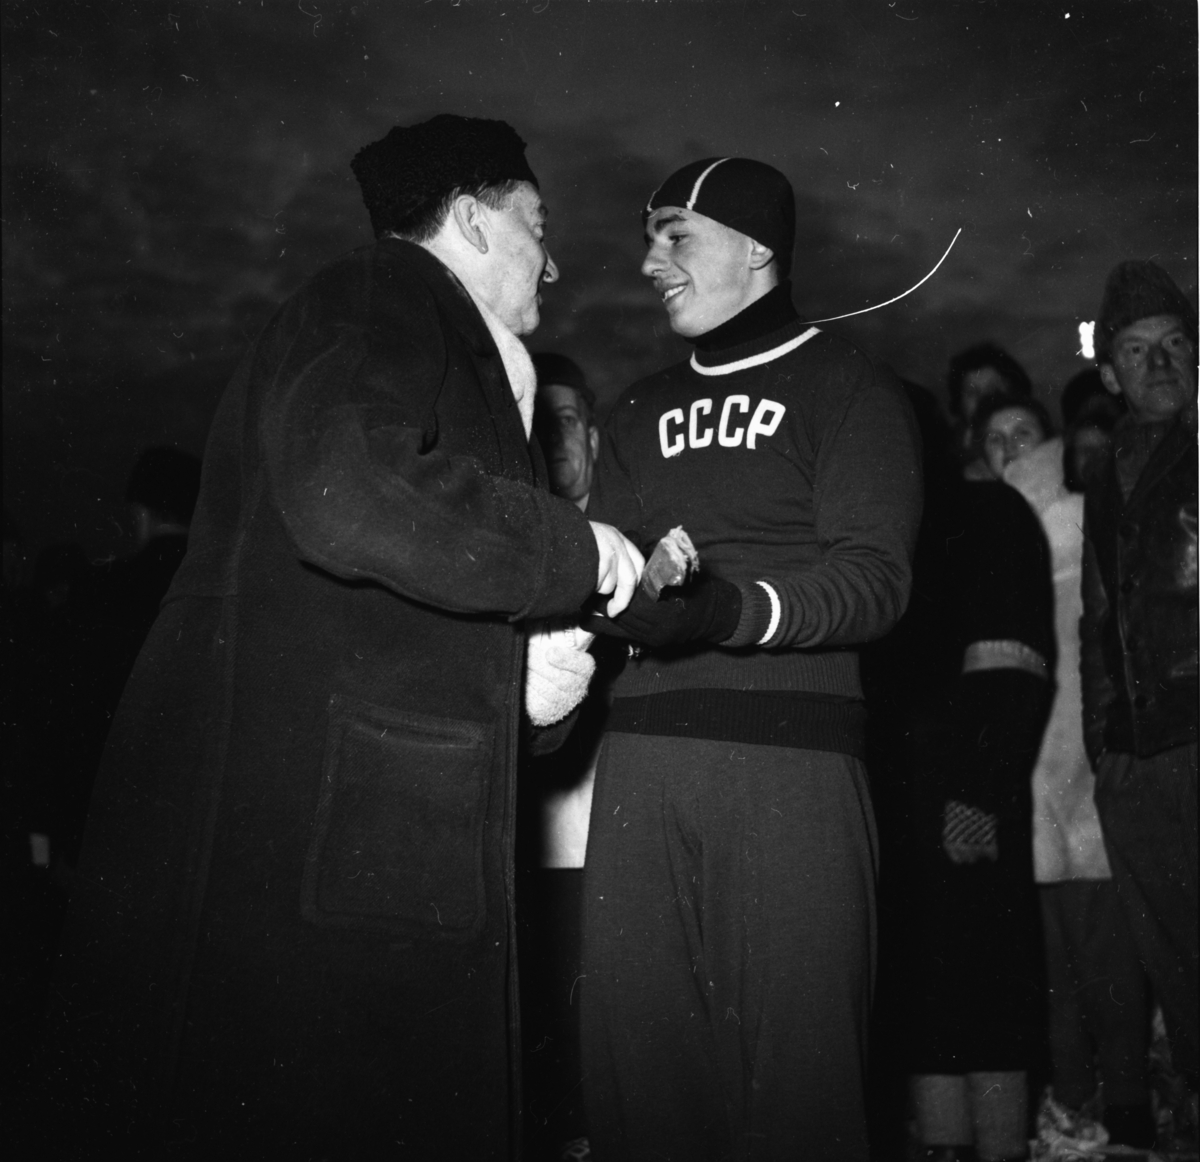 Vardens arkiv. "Skøytelandskamp Sovjet-Norge, Bislett"  13-14.02.1954